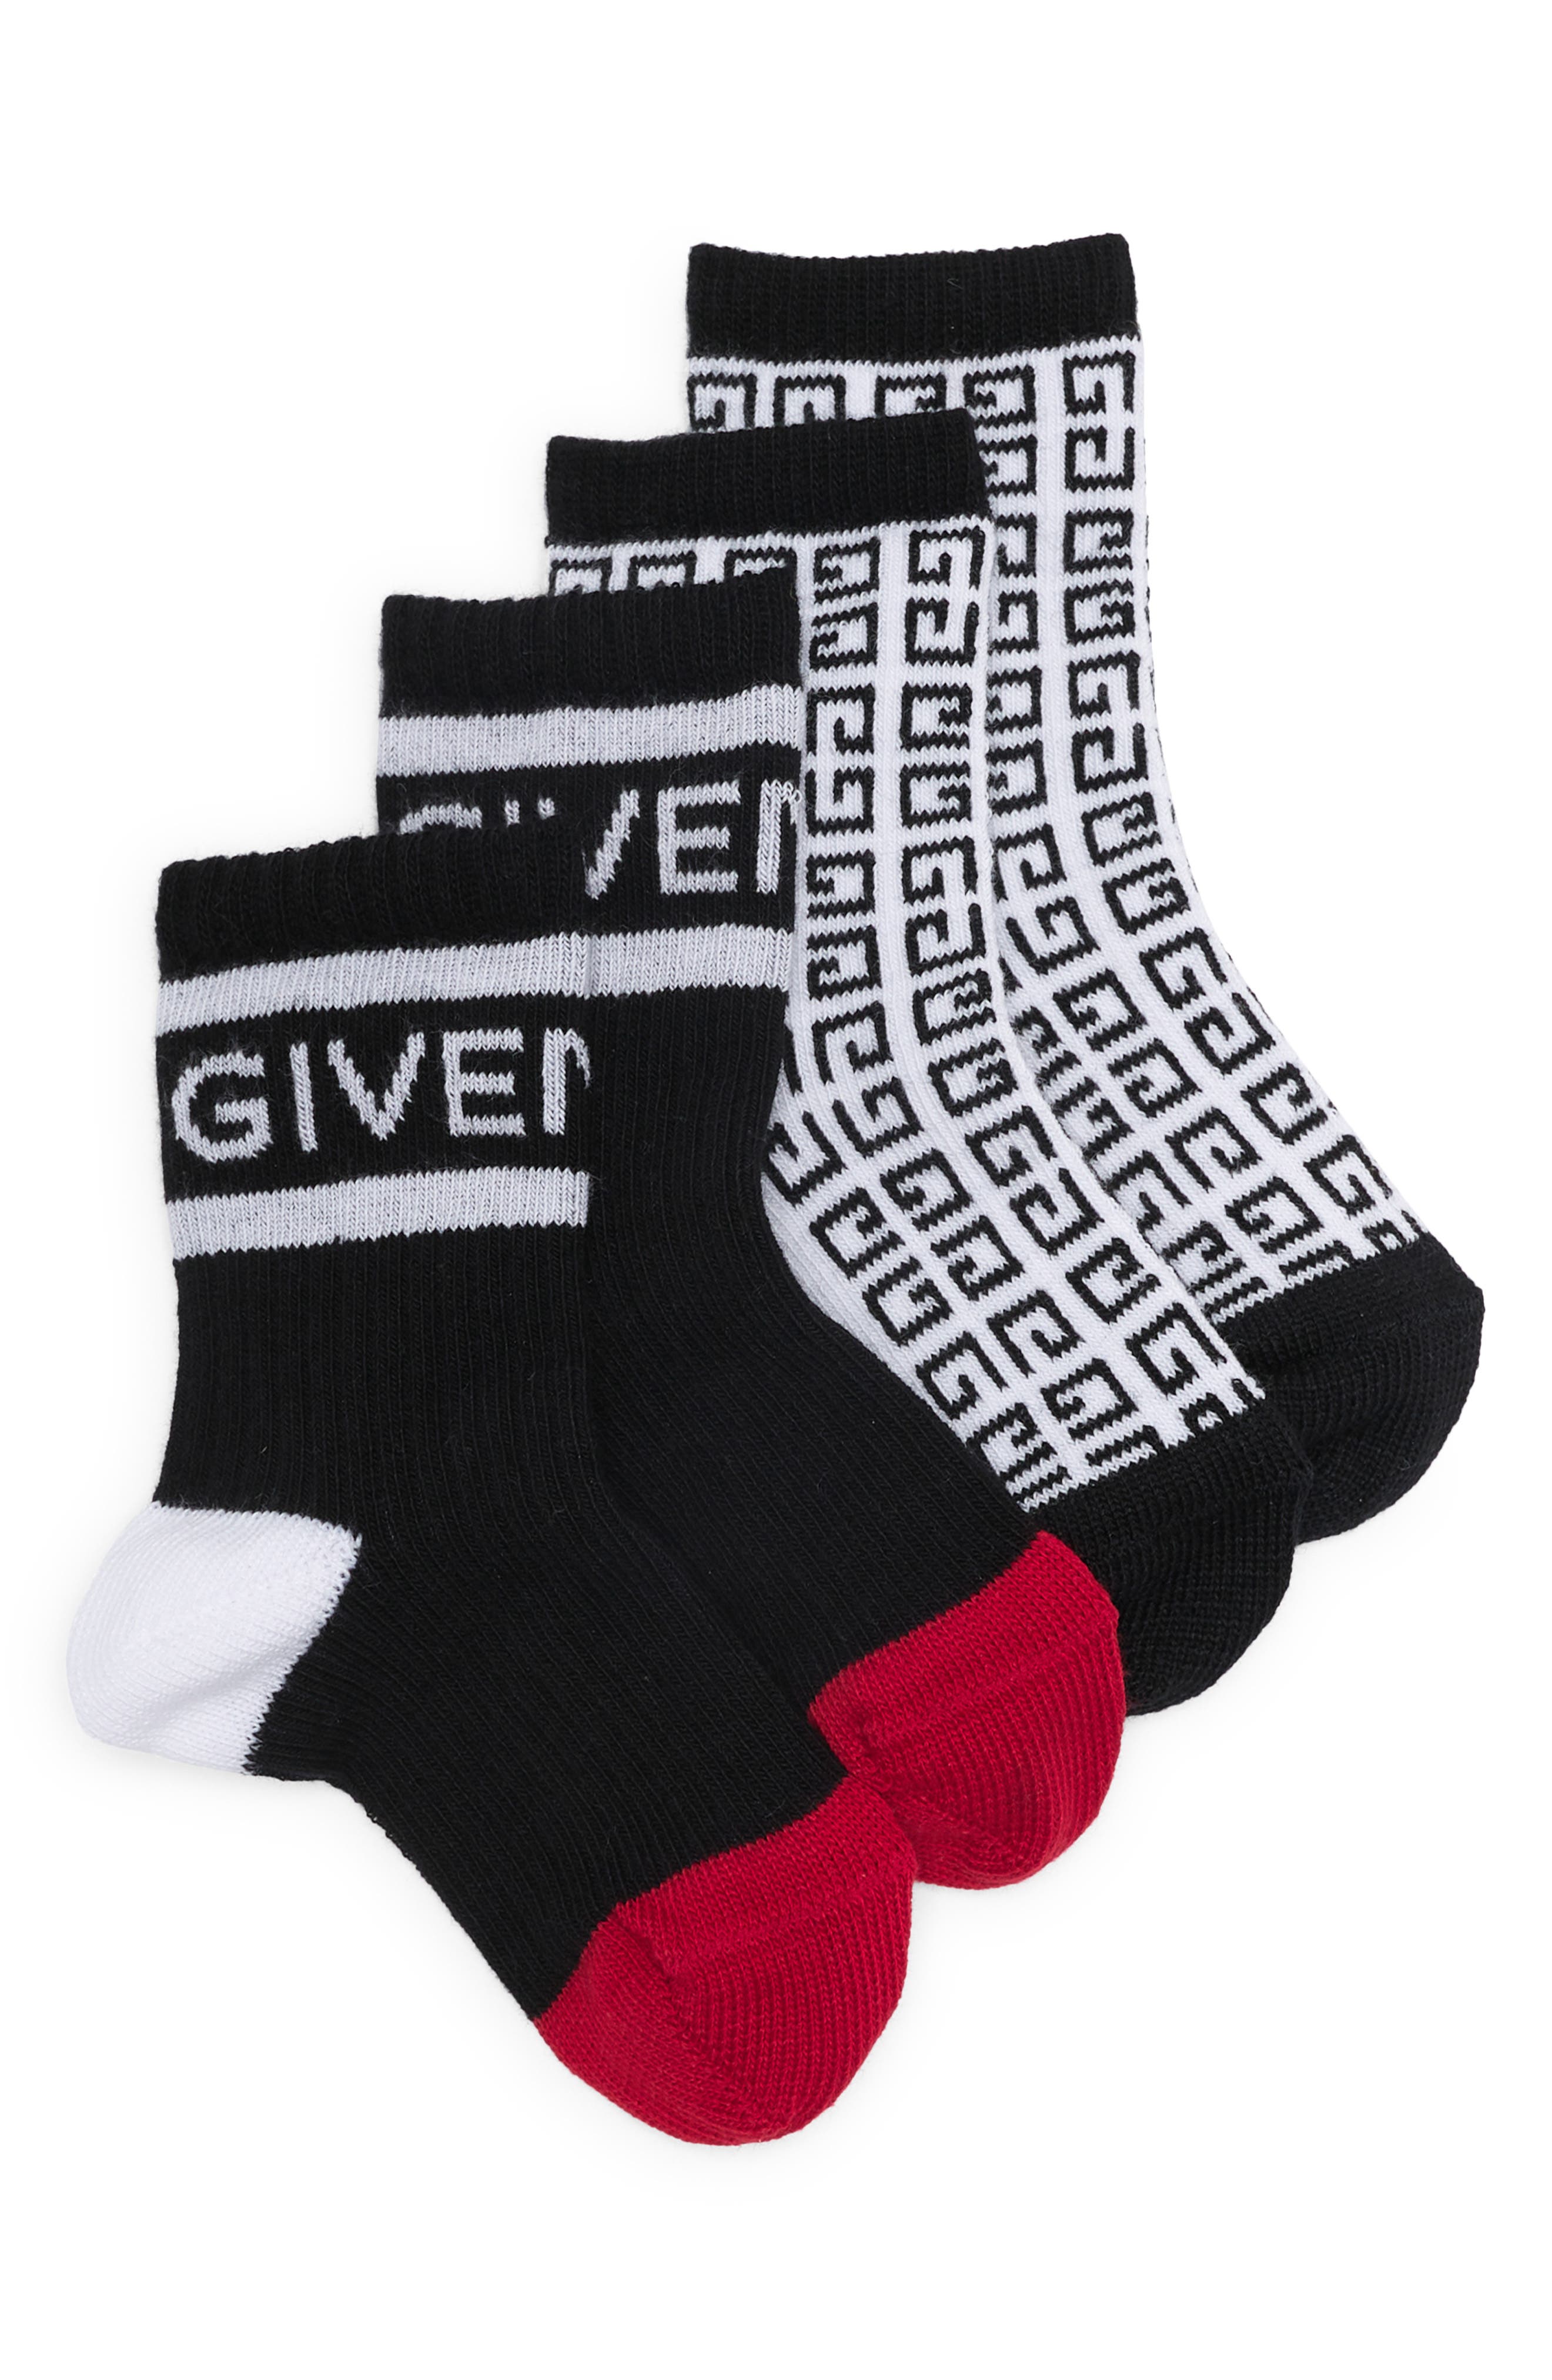 NWT Gymboree Girls Cotton Blend Socks 2-Pack Two-Pack 2pk NEW 2-pk Set NEW 